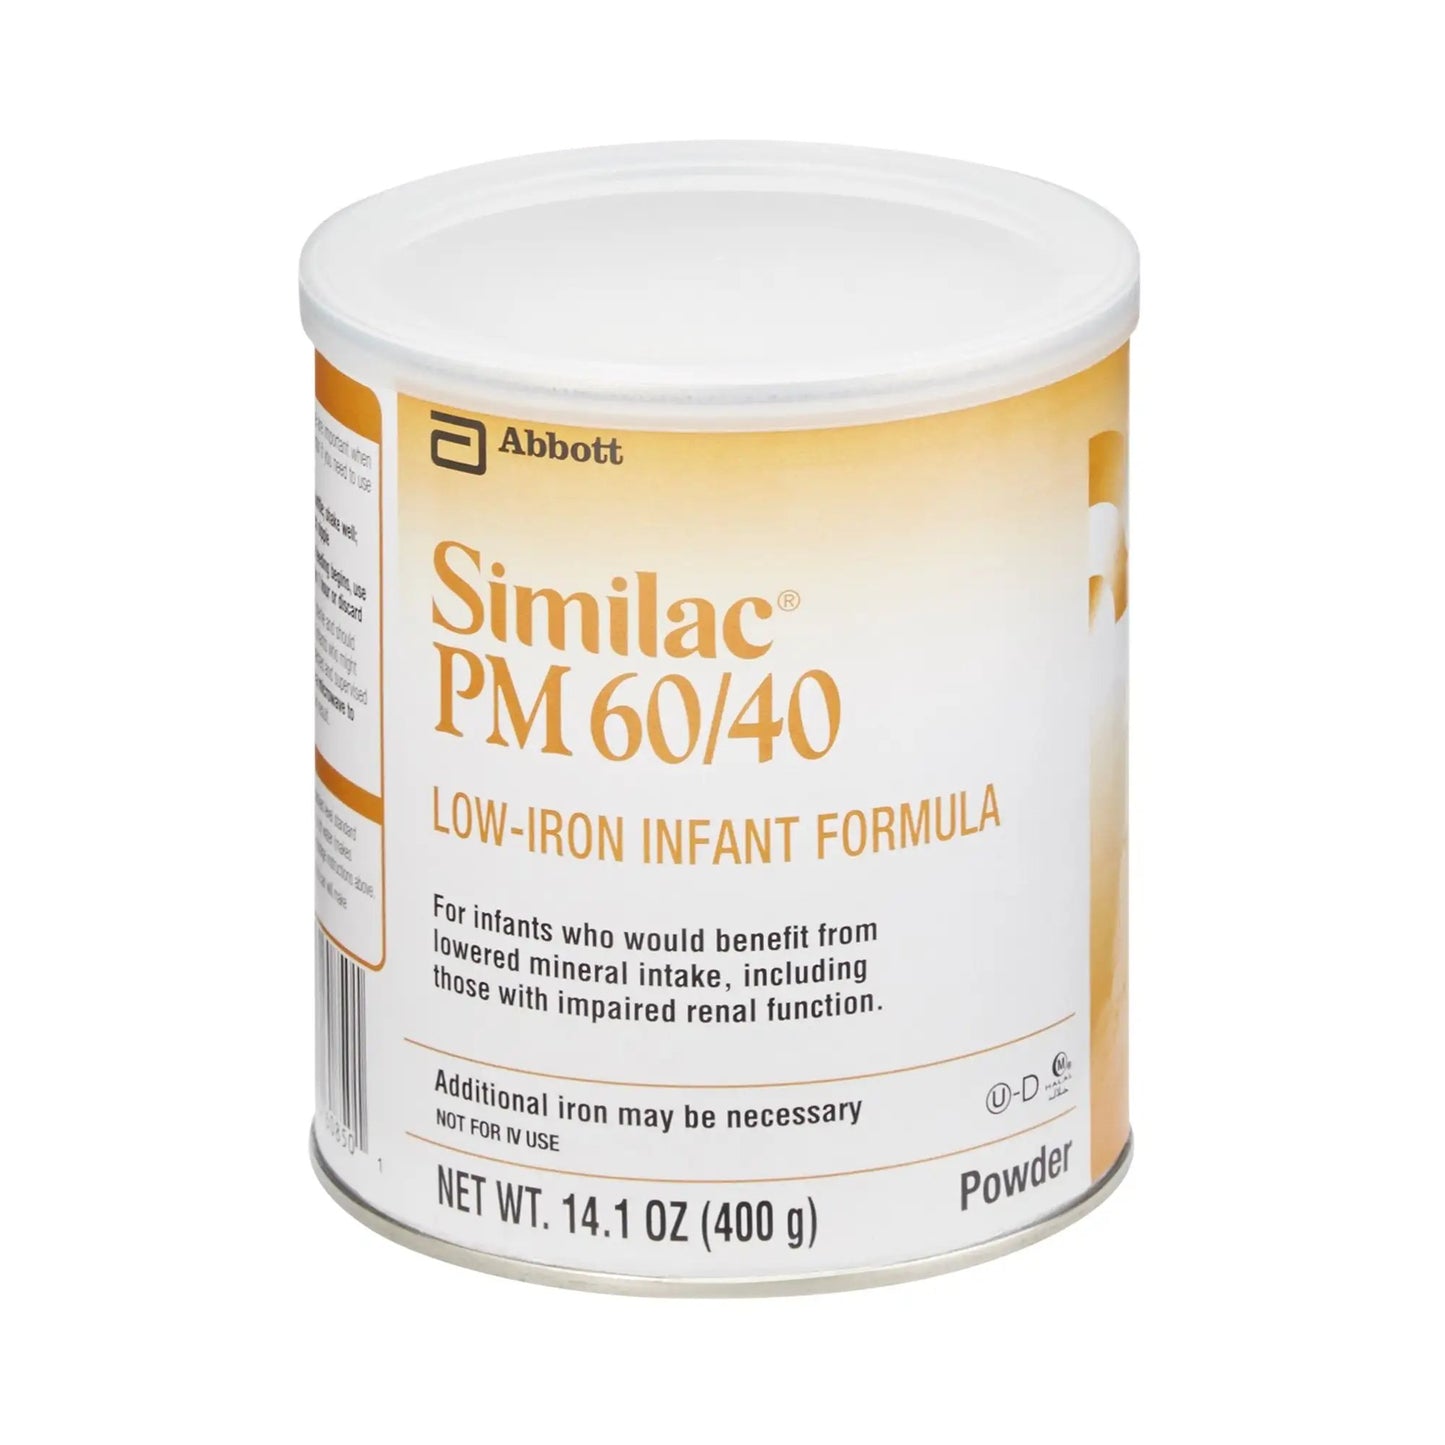 Abbott Similac PM 60 / 40 Low Iron Powder Infant Formula 14.1 oz. Can